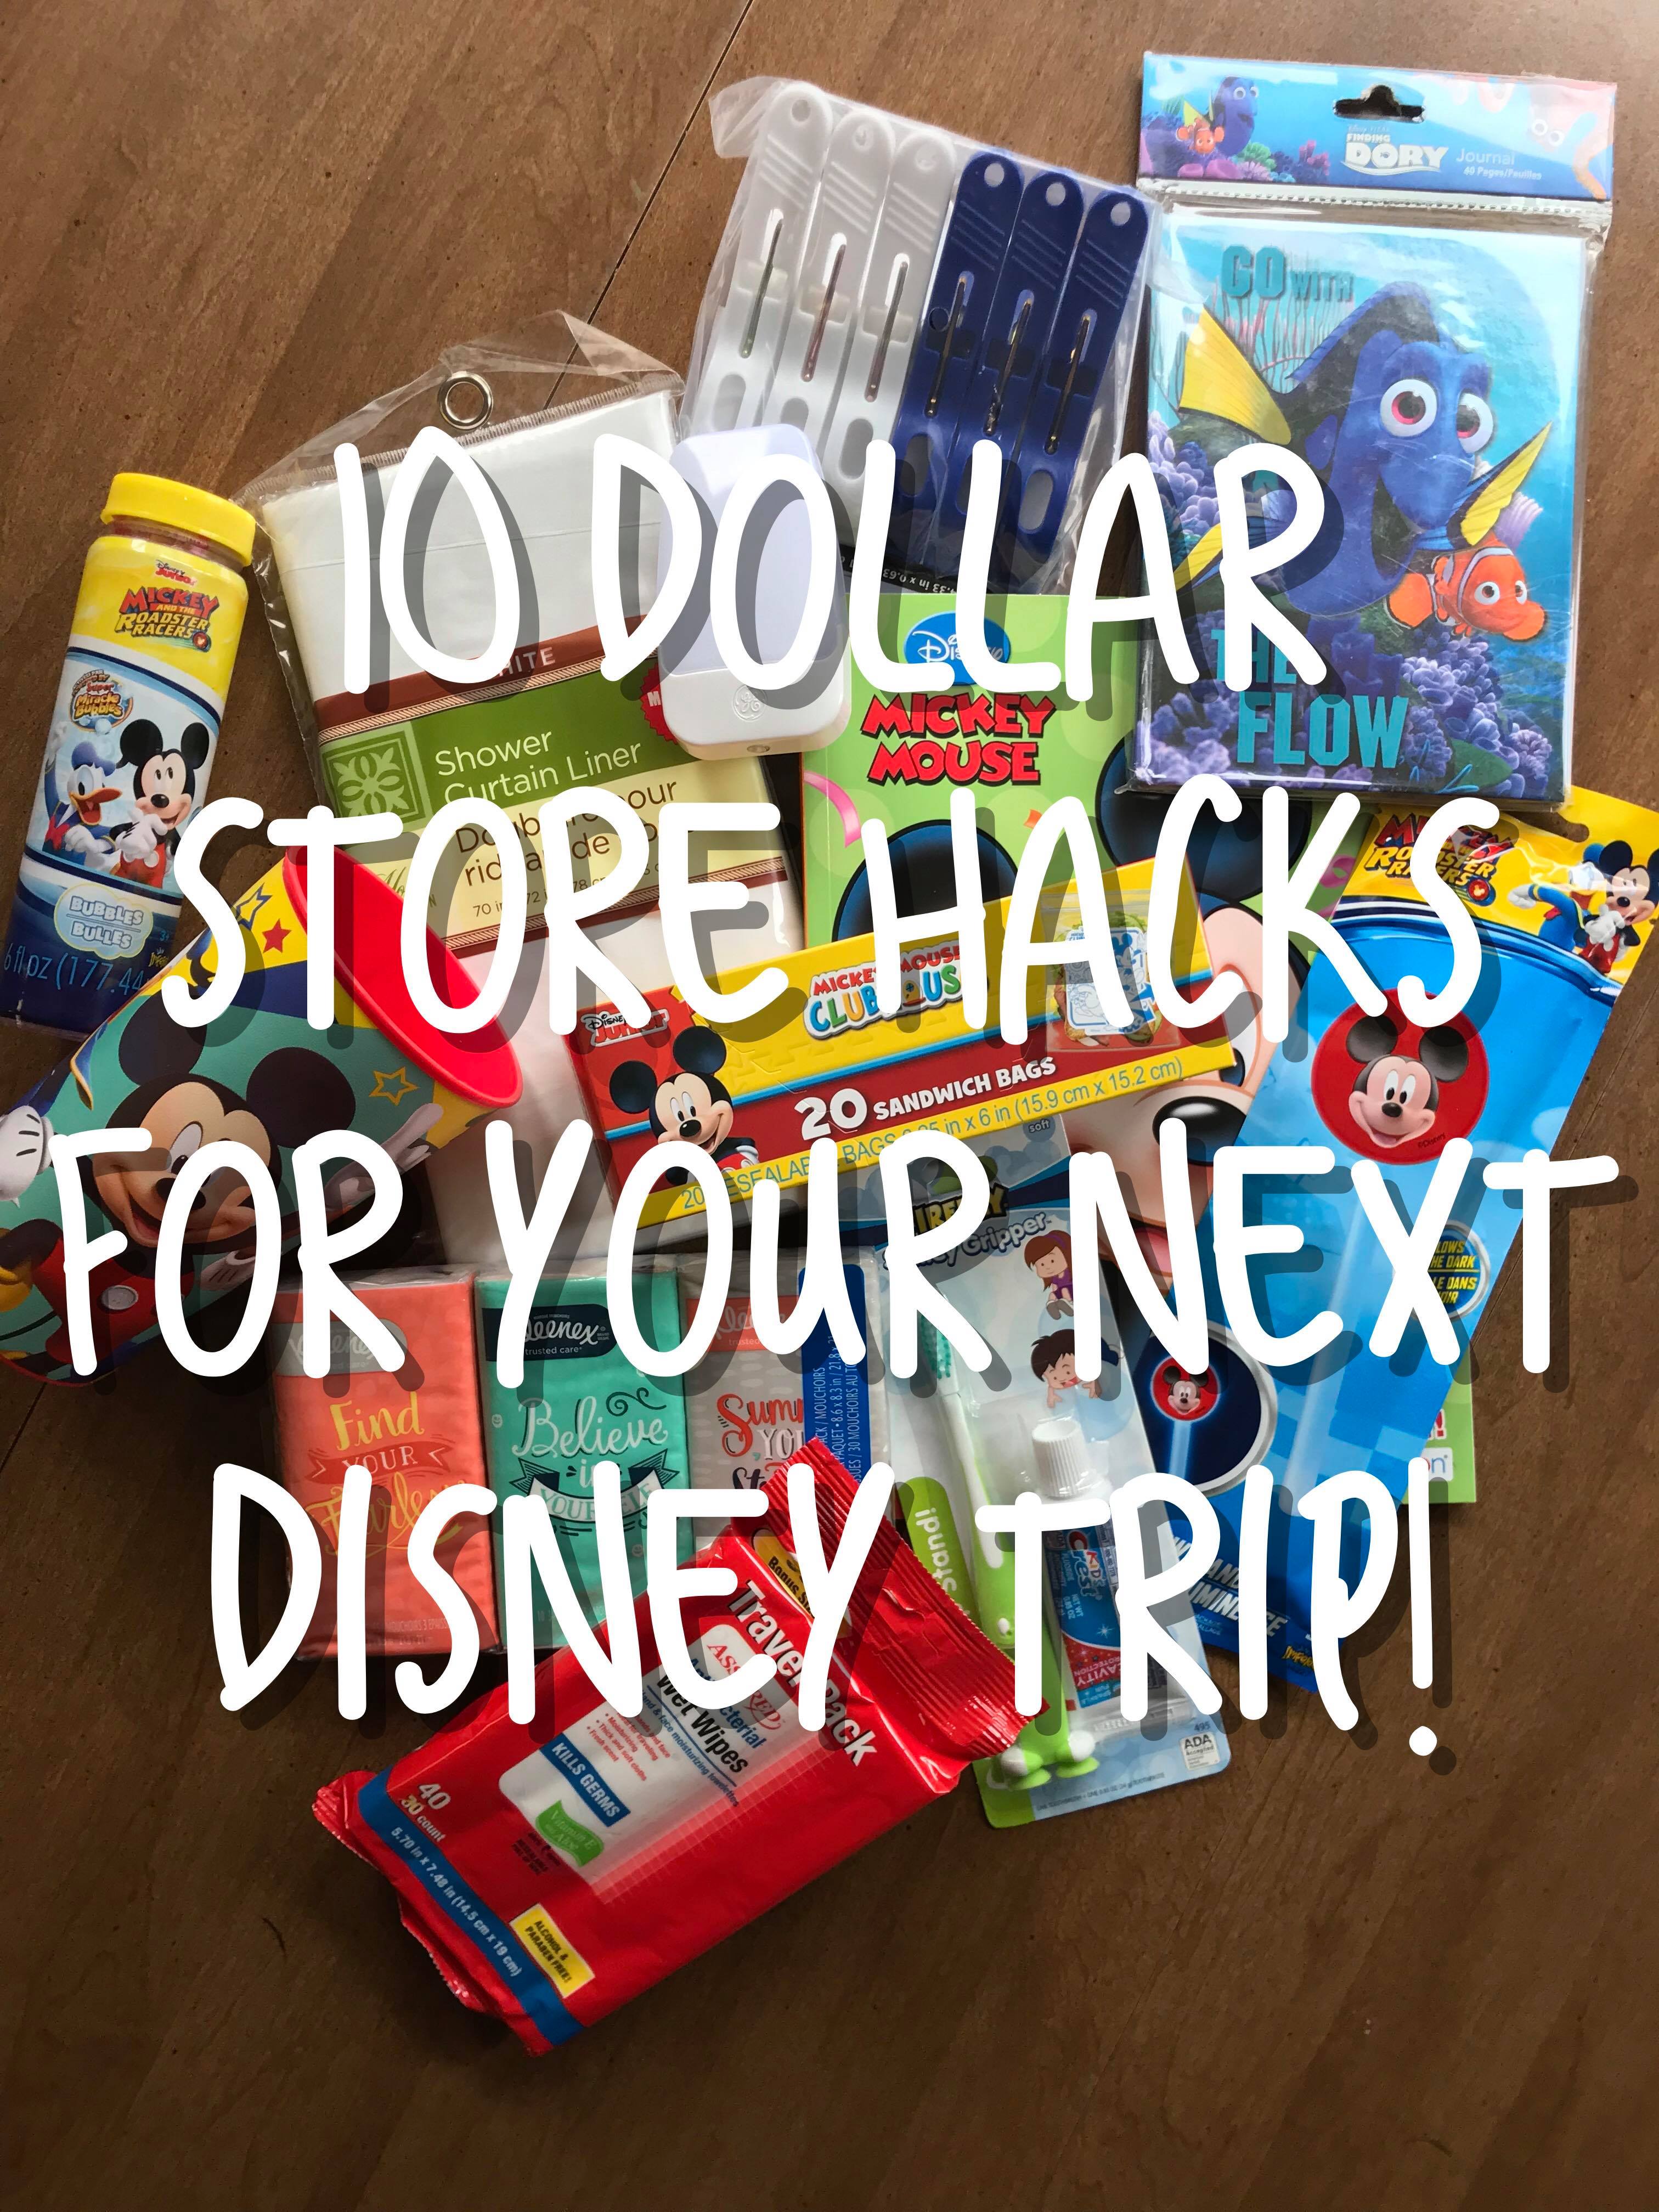 10 Dollar Store Hacks for Your Next Disney Trip!